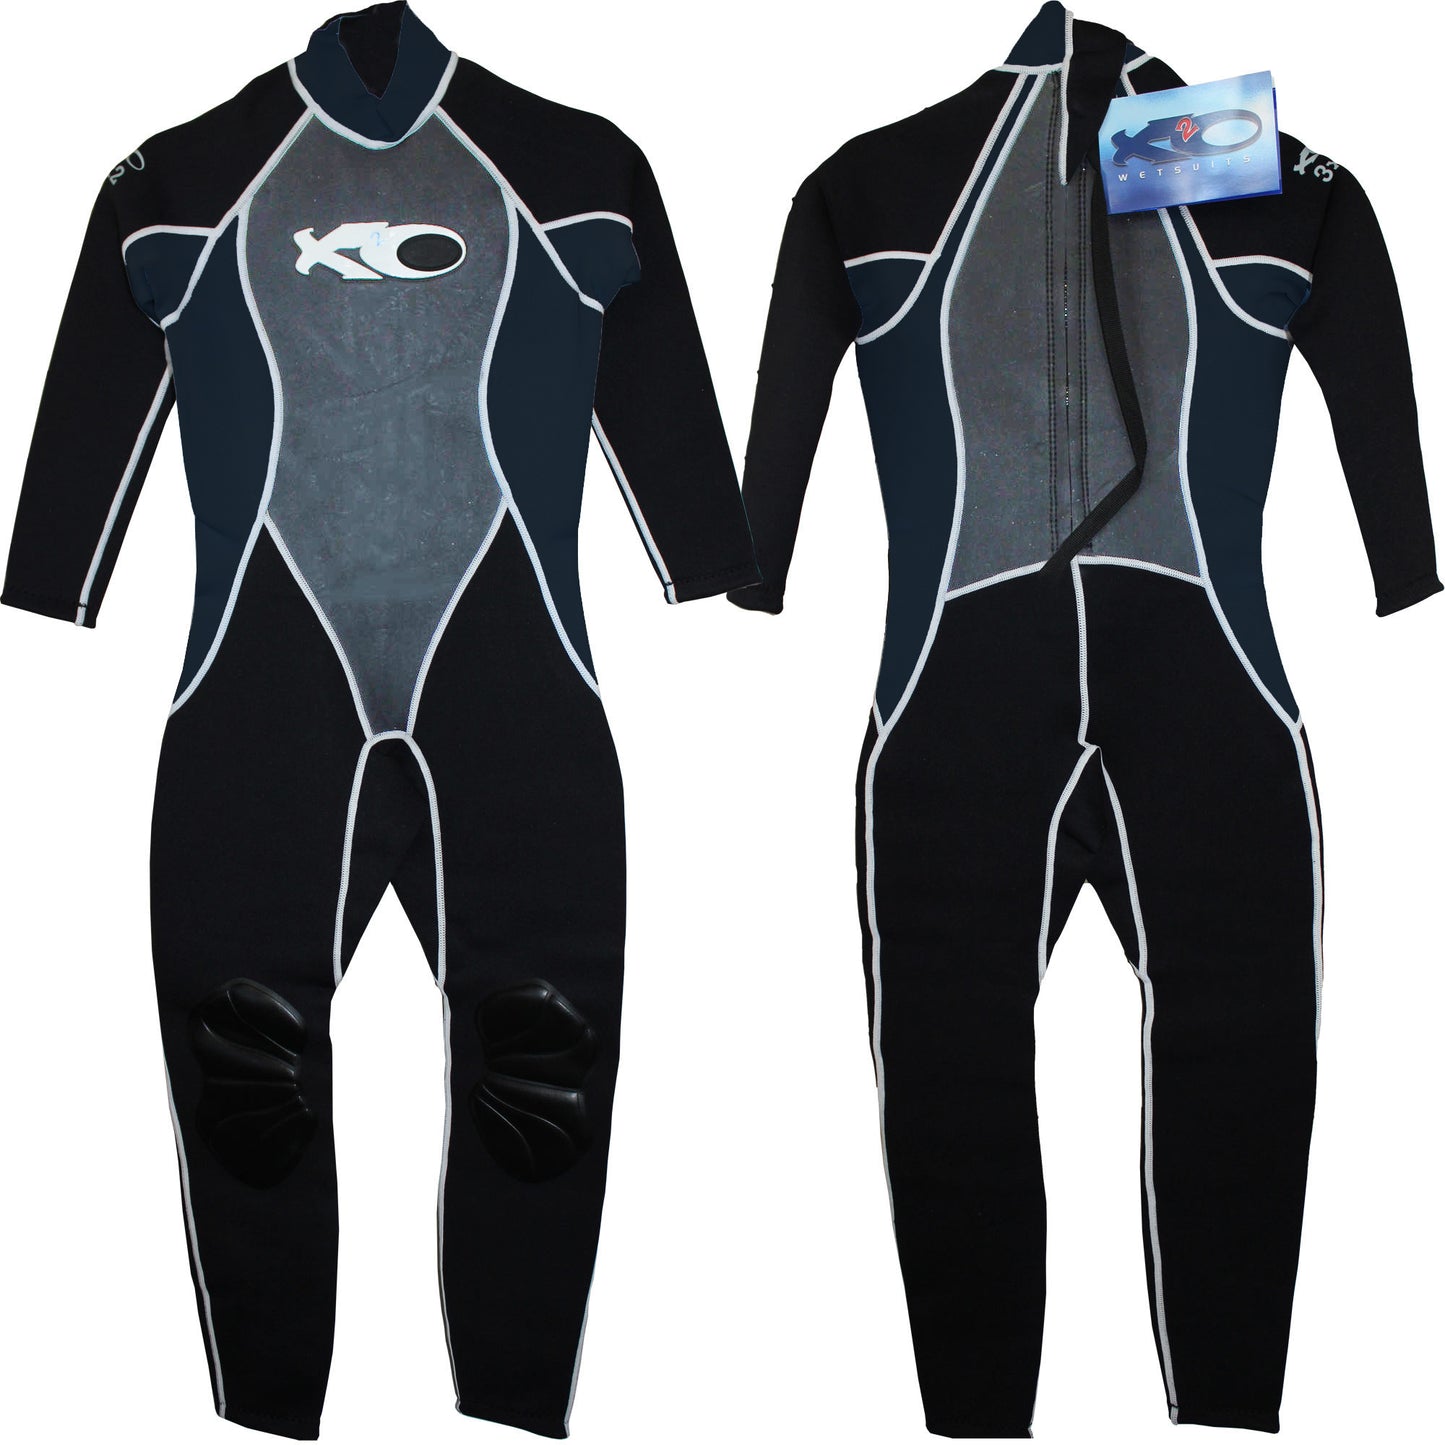 X2O Women's Full Wetsuit 3:2 Black - Medium